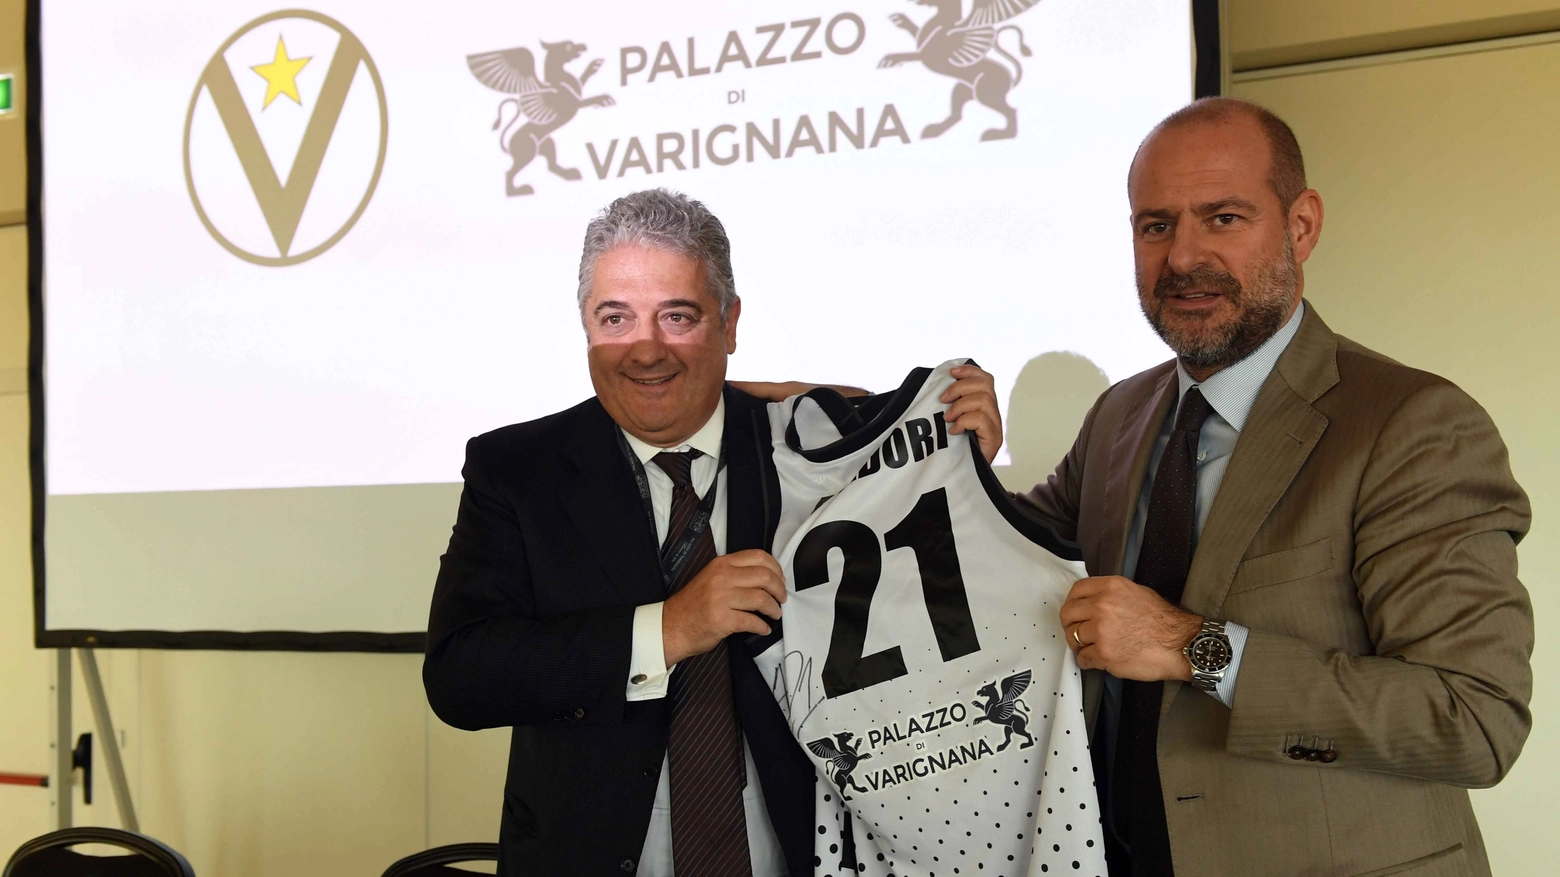 Partnership tra Virtus Bologna e Palazzo Varignana: ecco la canotta della Champions